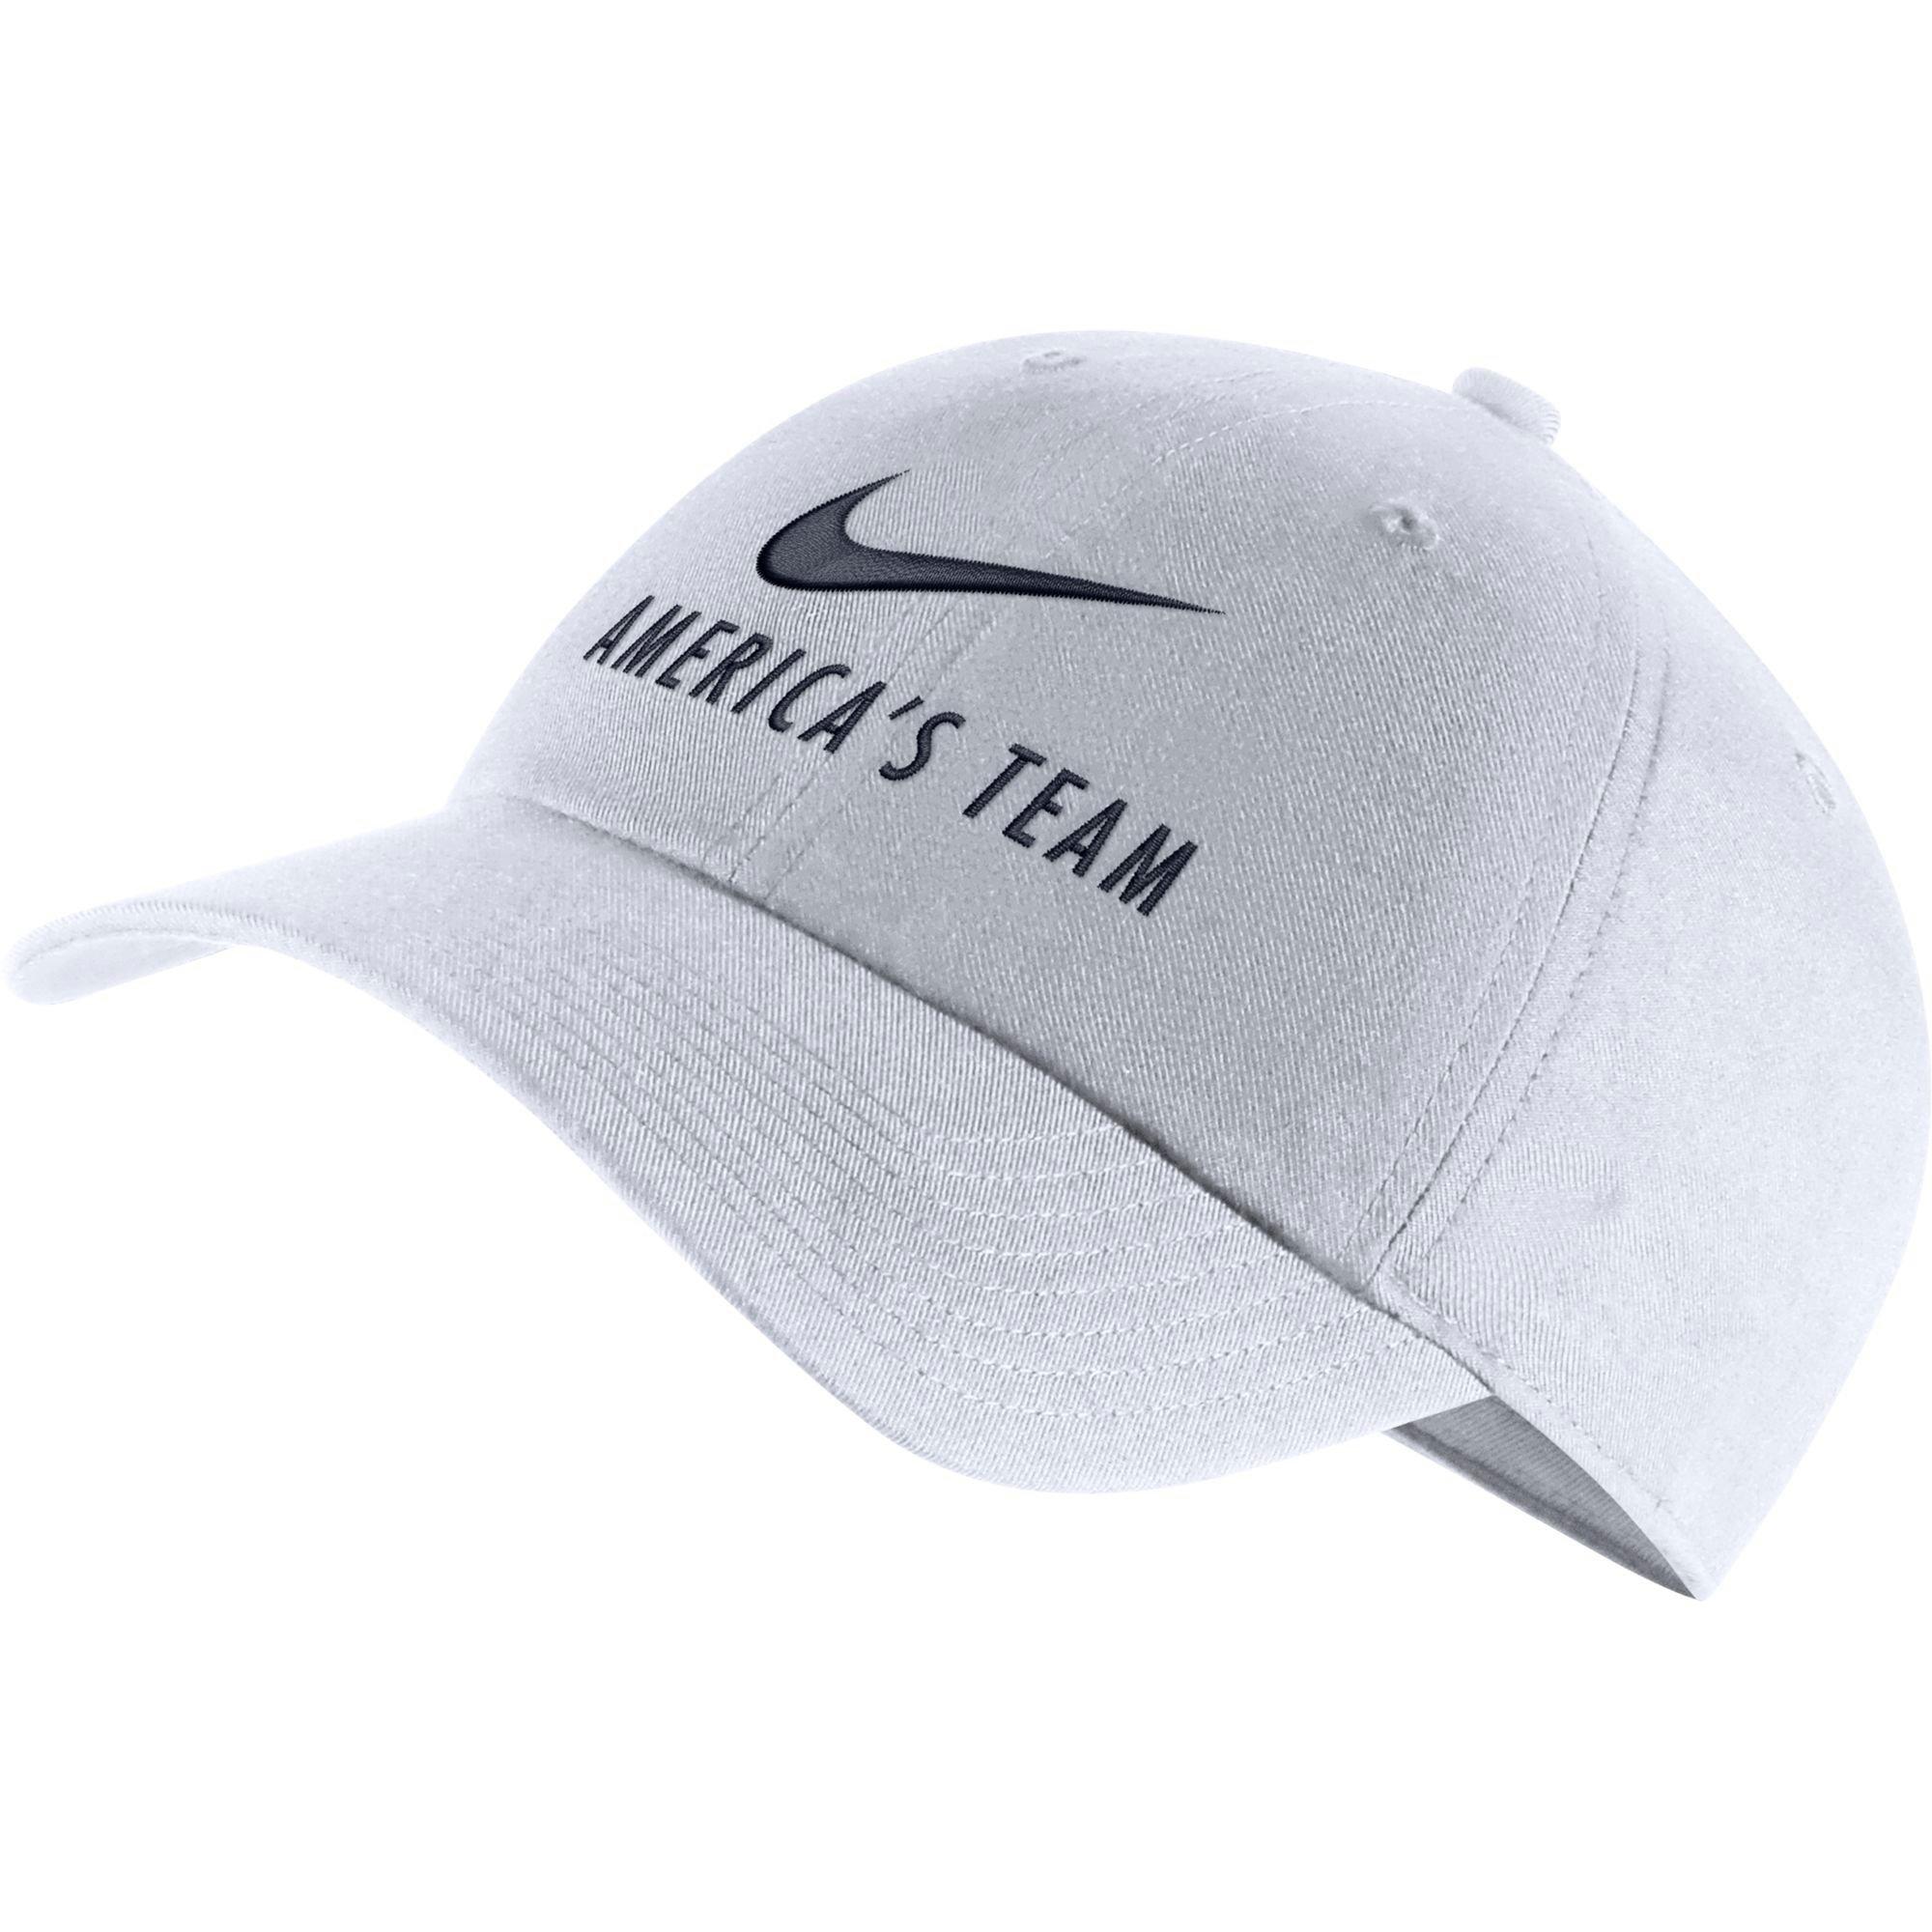 hibbett sports nike hats